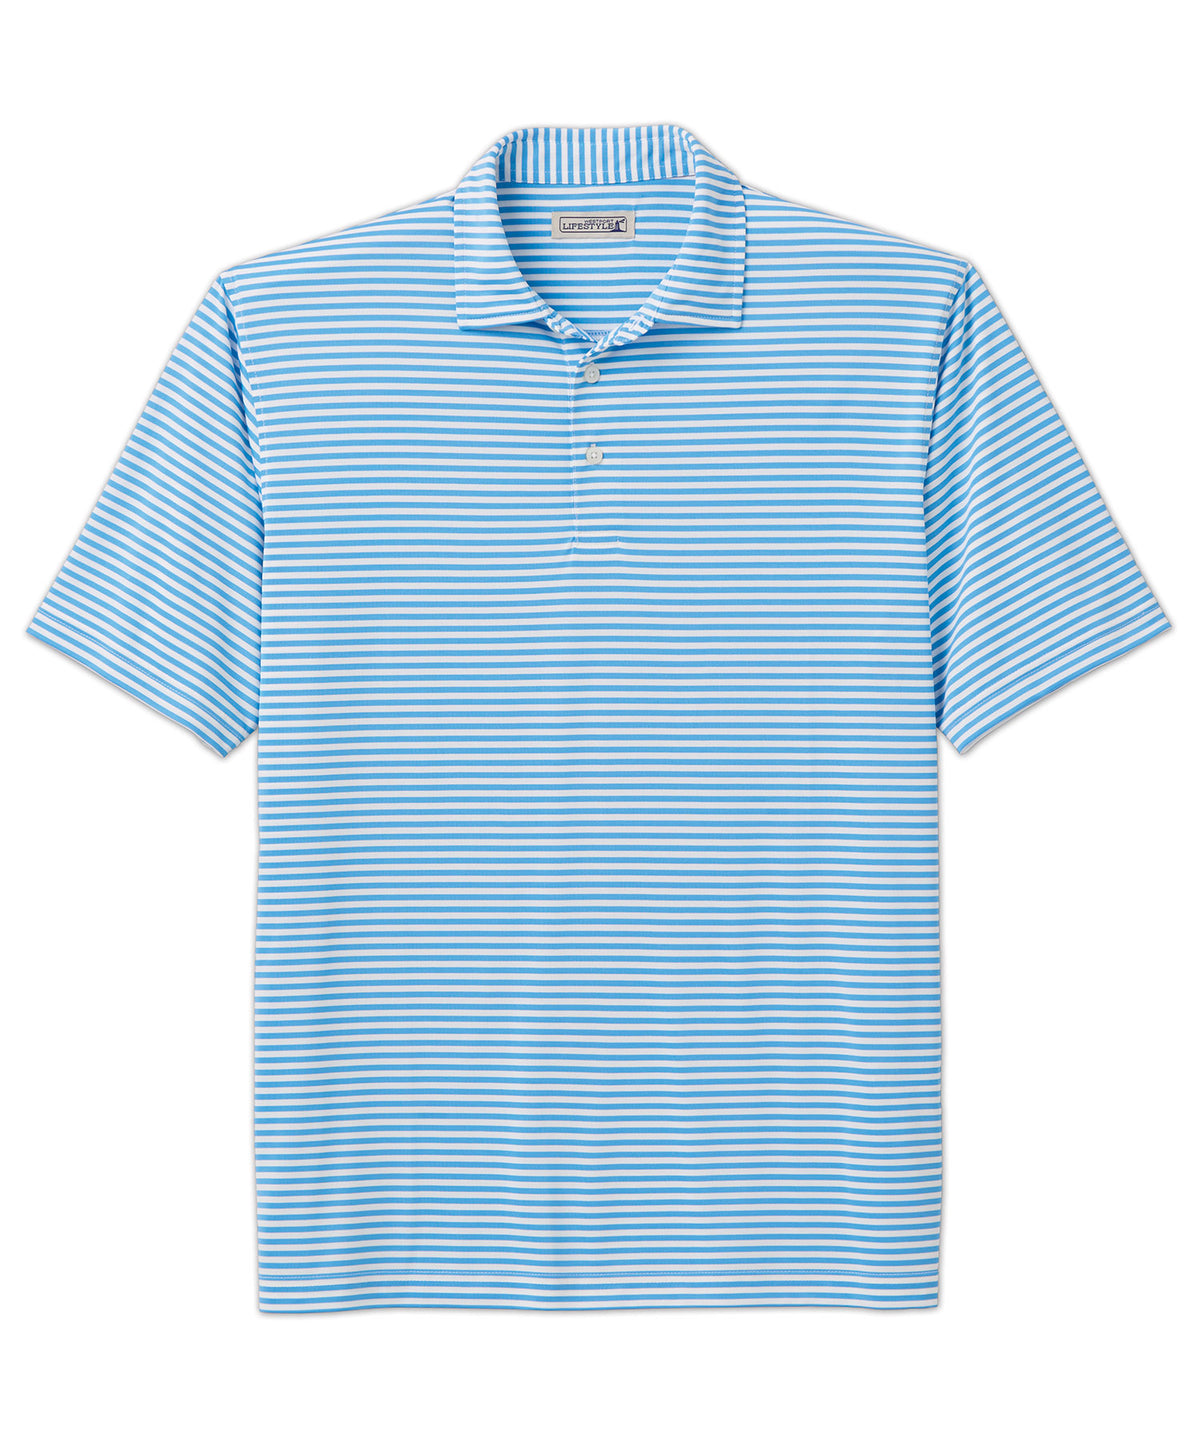 Westport Lifestyle Short Sleeve Performance Stripe Polo Shirt, Men's Big & Tall